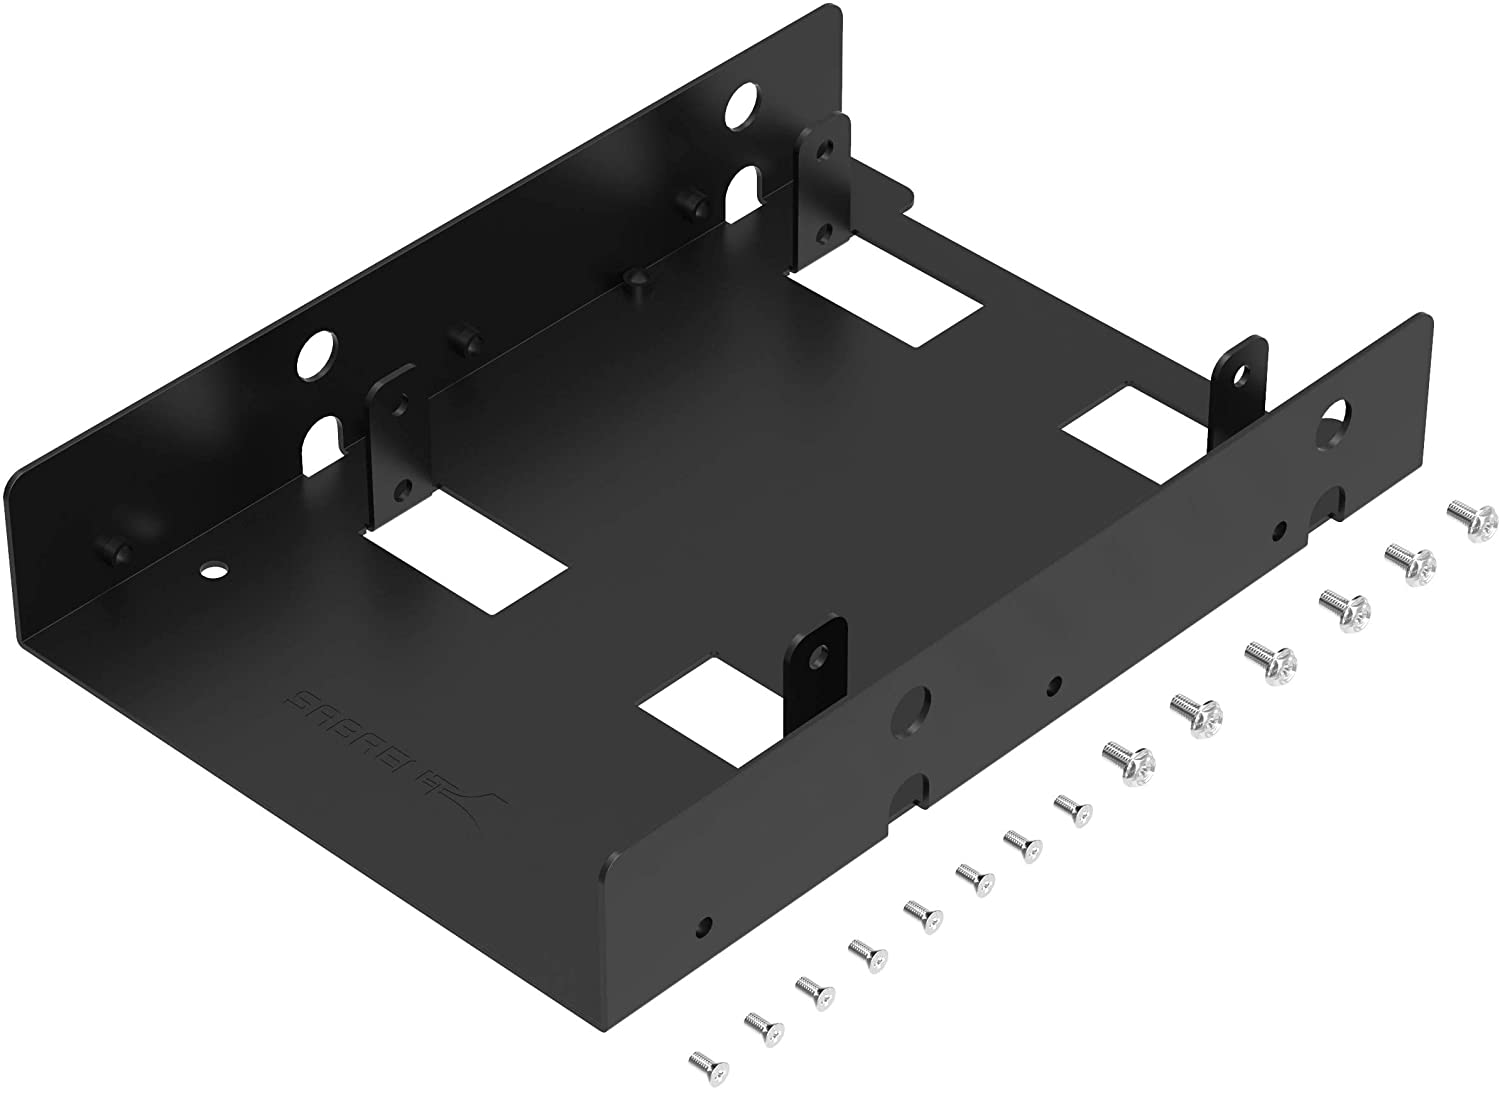 SABRENT 2.5 Inch to 3.5 Inch Internal Hard Disk Drive Mounting Bracket Kit (BK-HDDF)